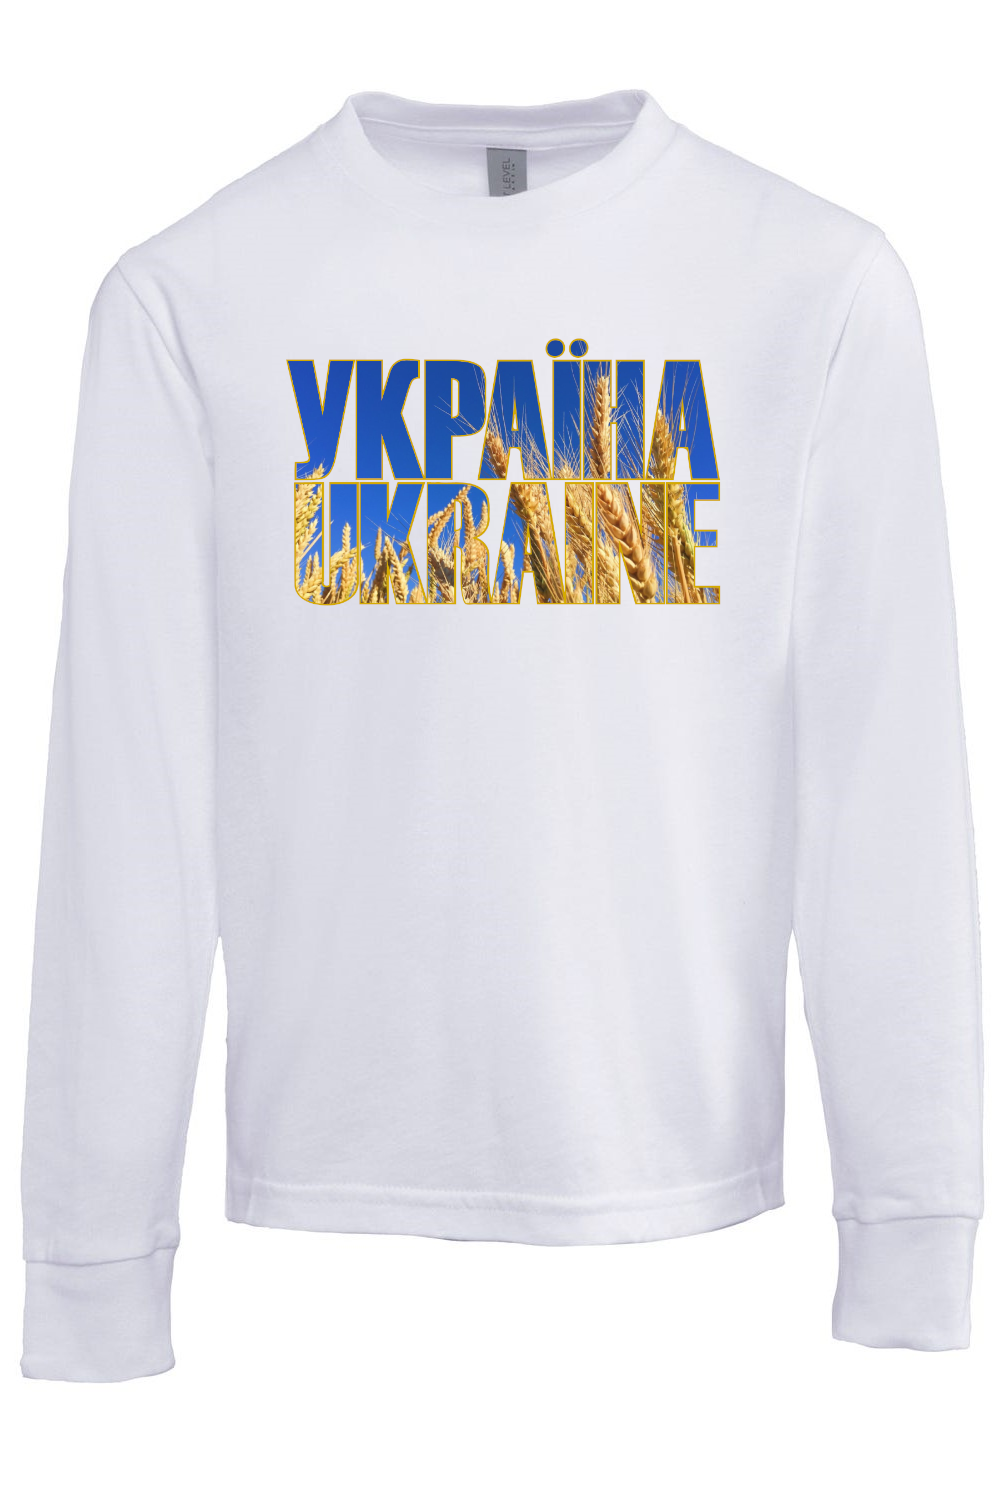 Youth long sleeve shirt "Україна Ukraine"